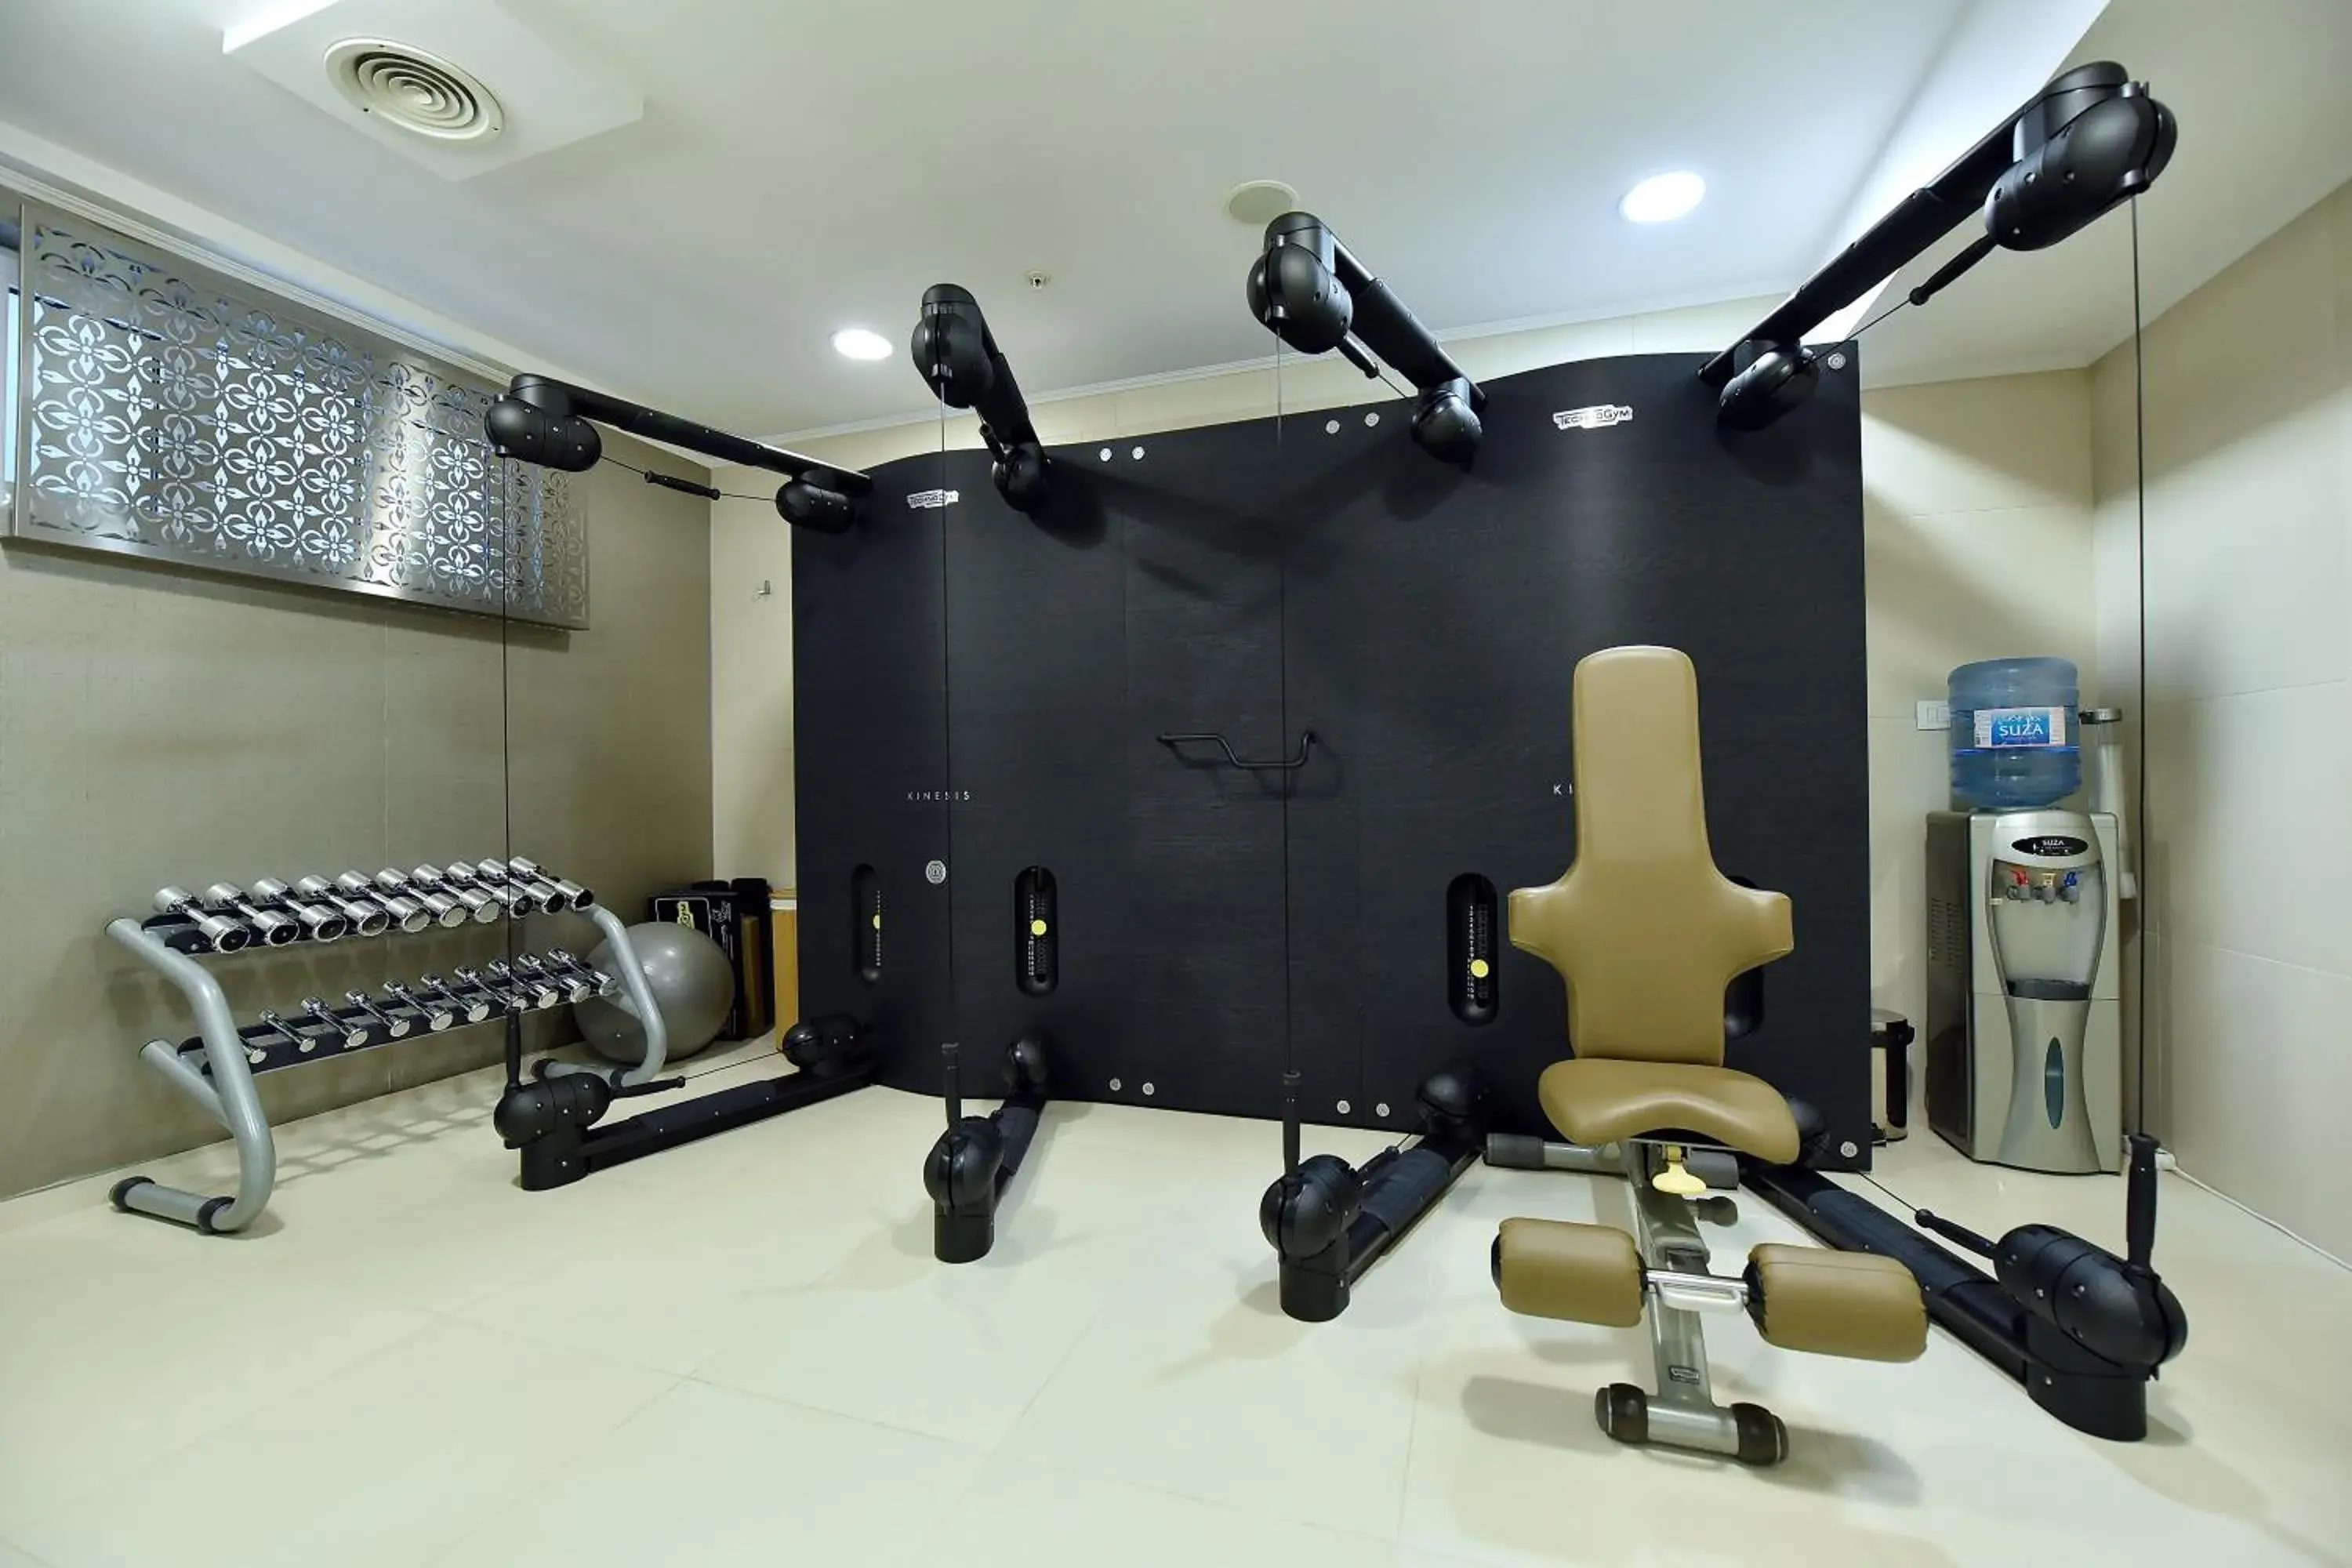 Fitness centre/facilities, Fitness Center/Facilities in Hotel Ziya